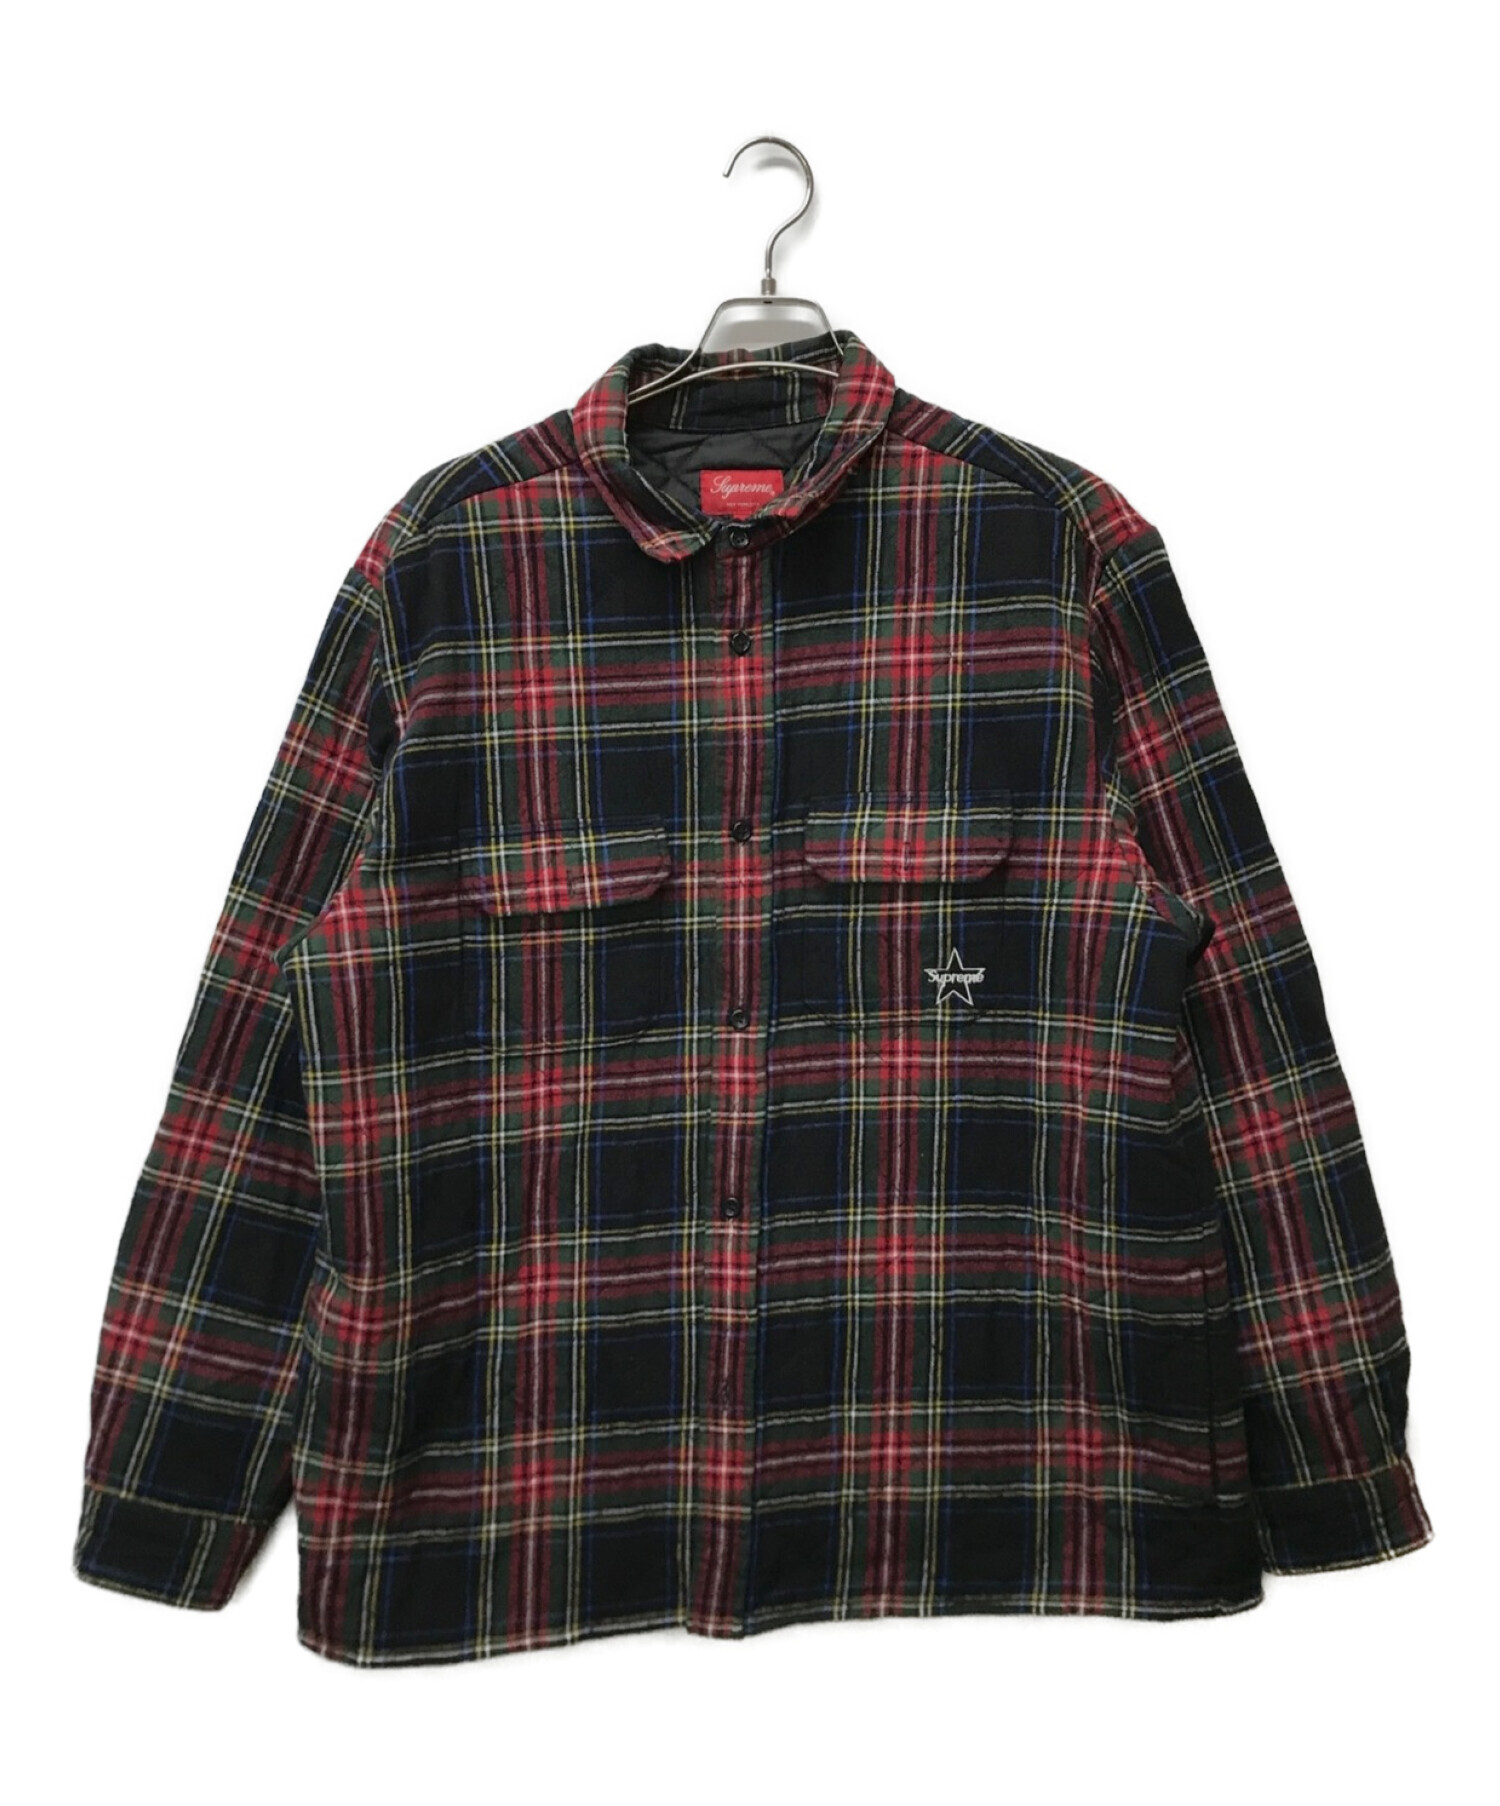 Supreme (シュプリーム) Quilted Plaid Flannel Shirt レッド サイズ:L